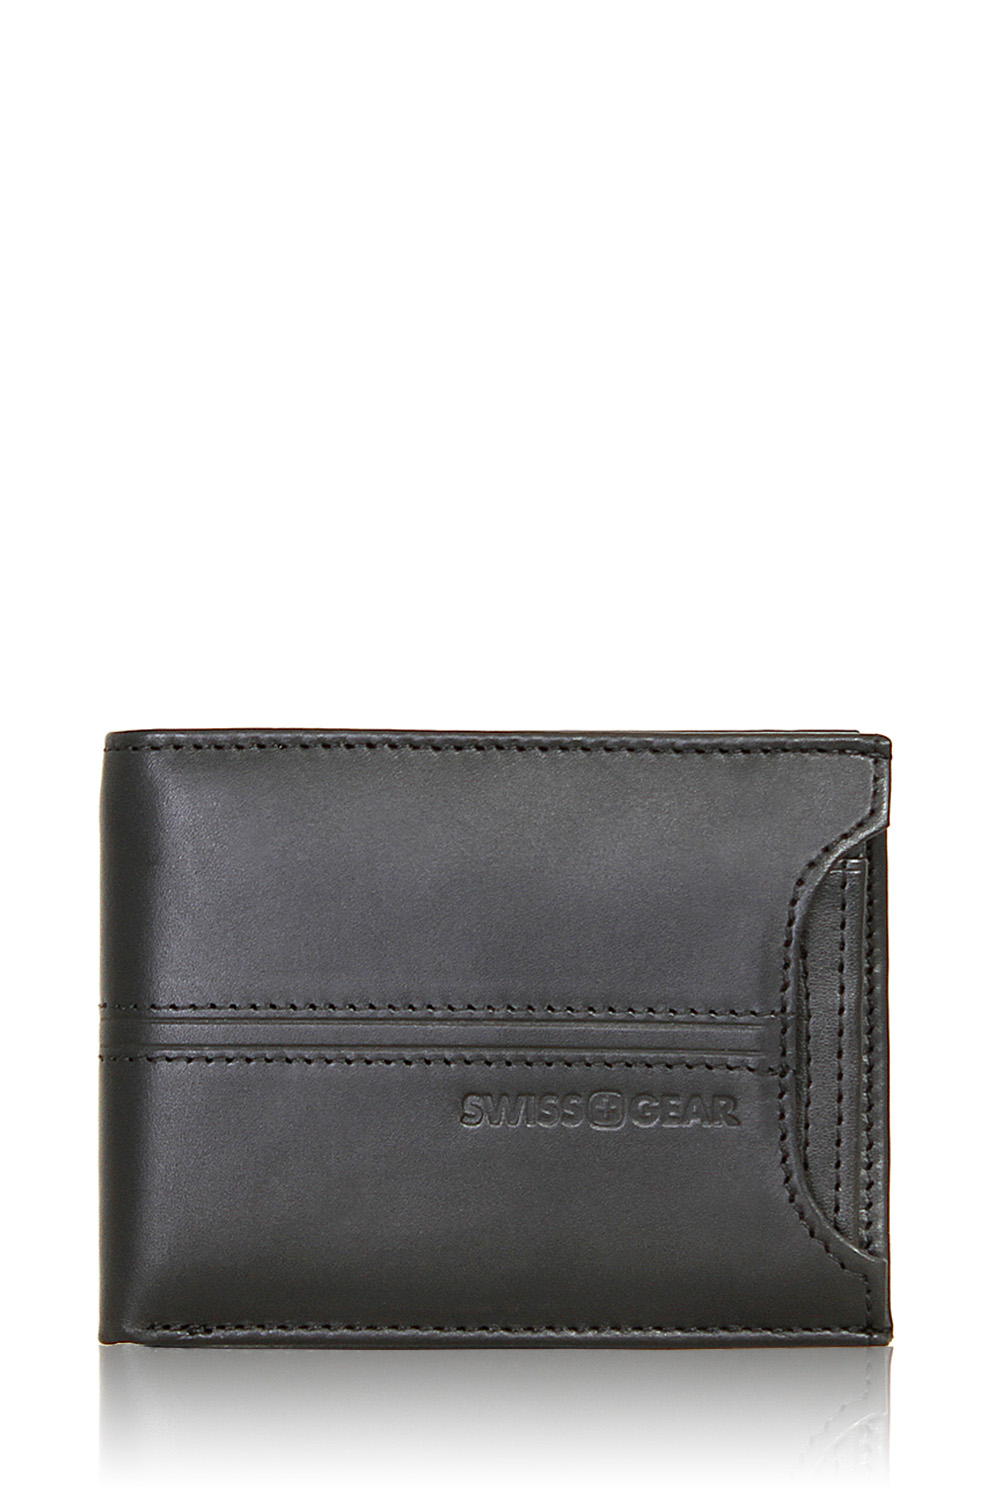 Swiss Gear Men's RFID Saffiano Leather Bifold Billfold Wallet Gift Box NEW Black 